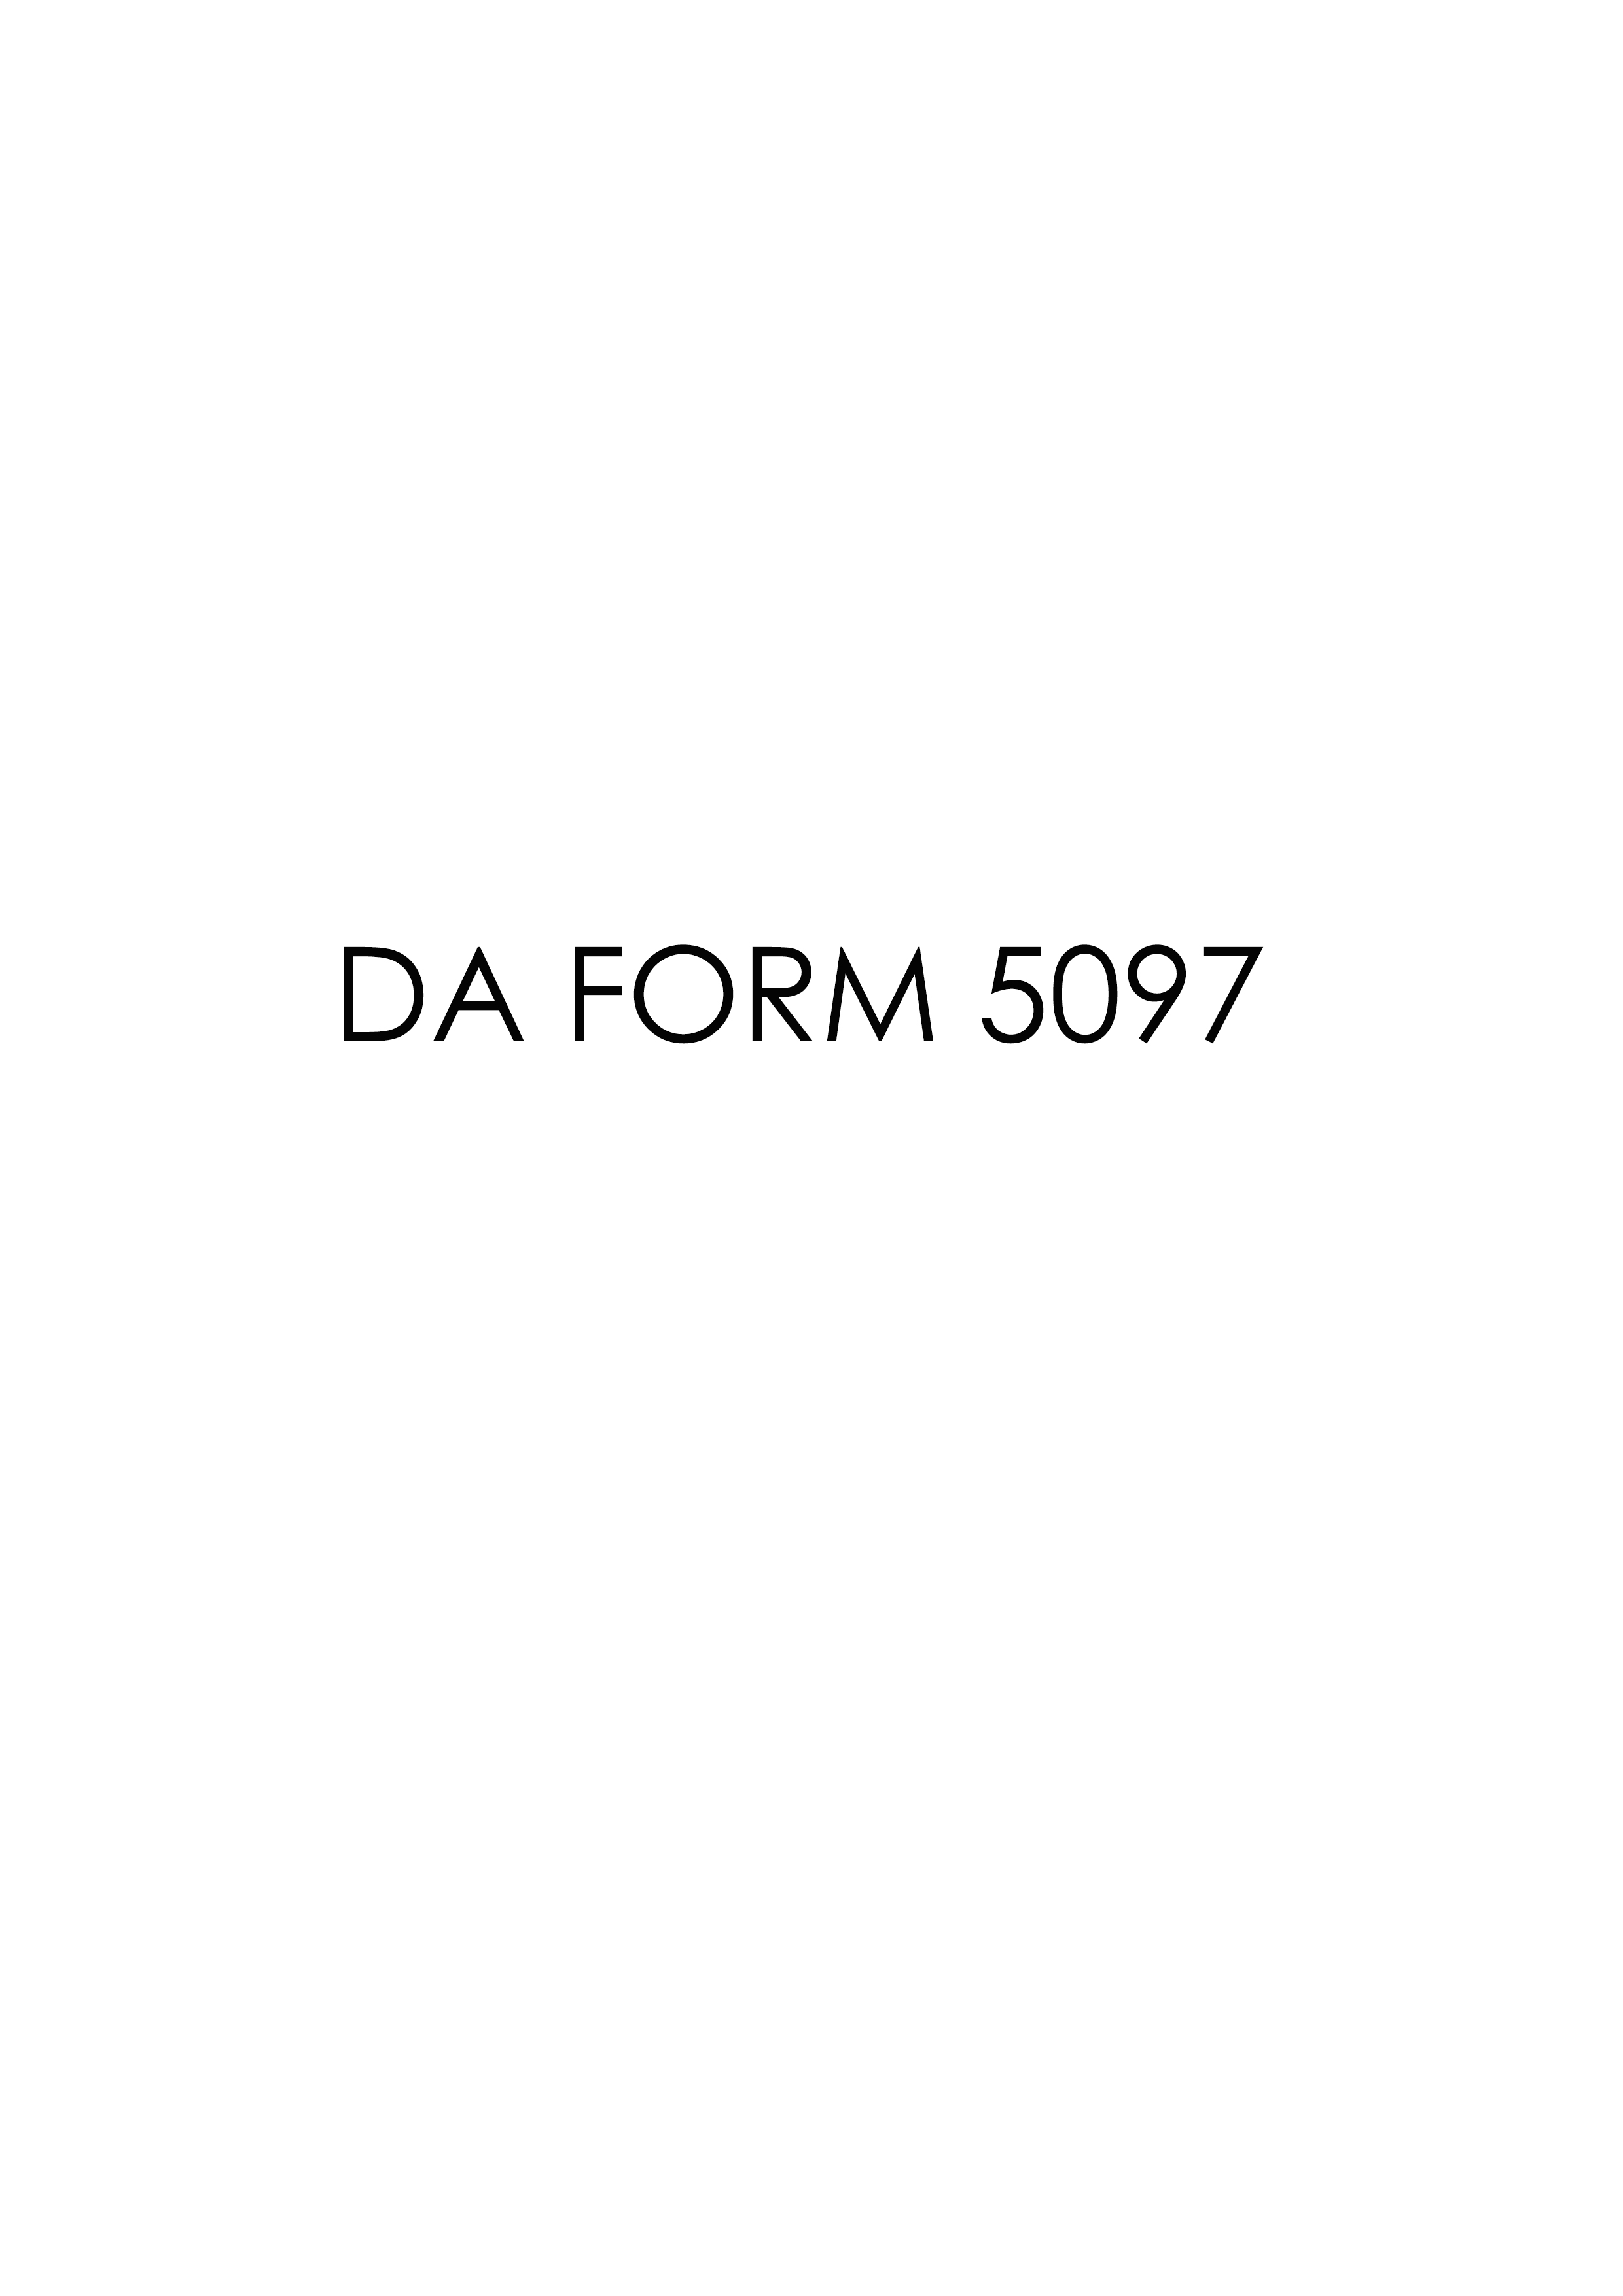 da Form 5097 fillable